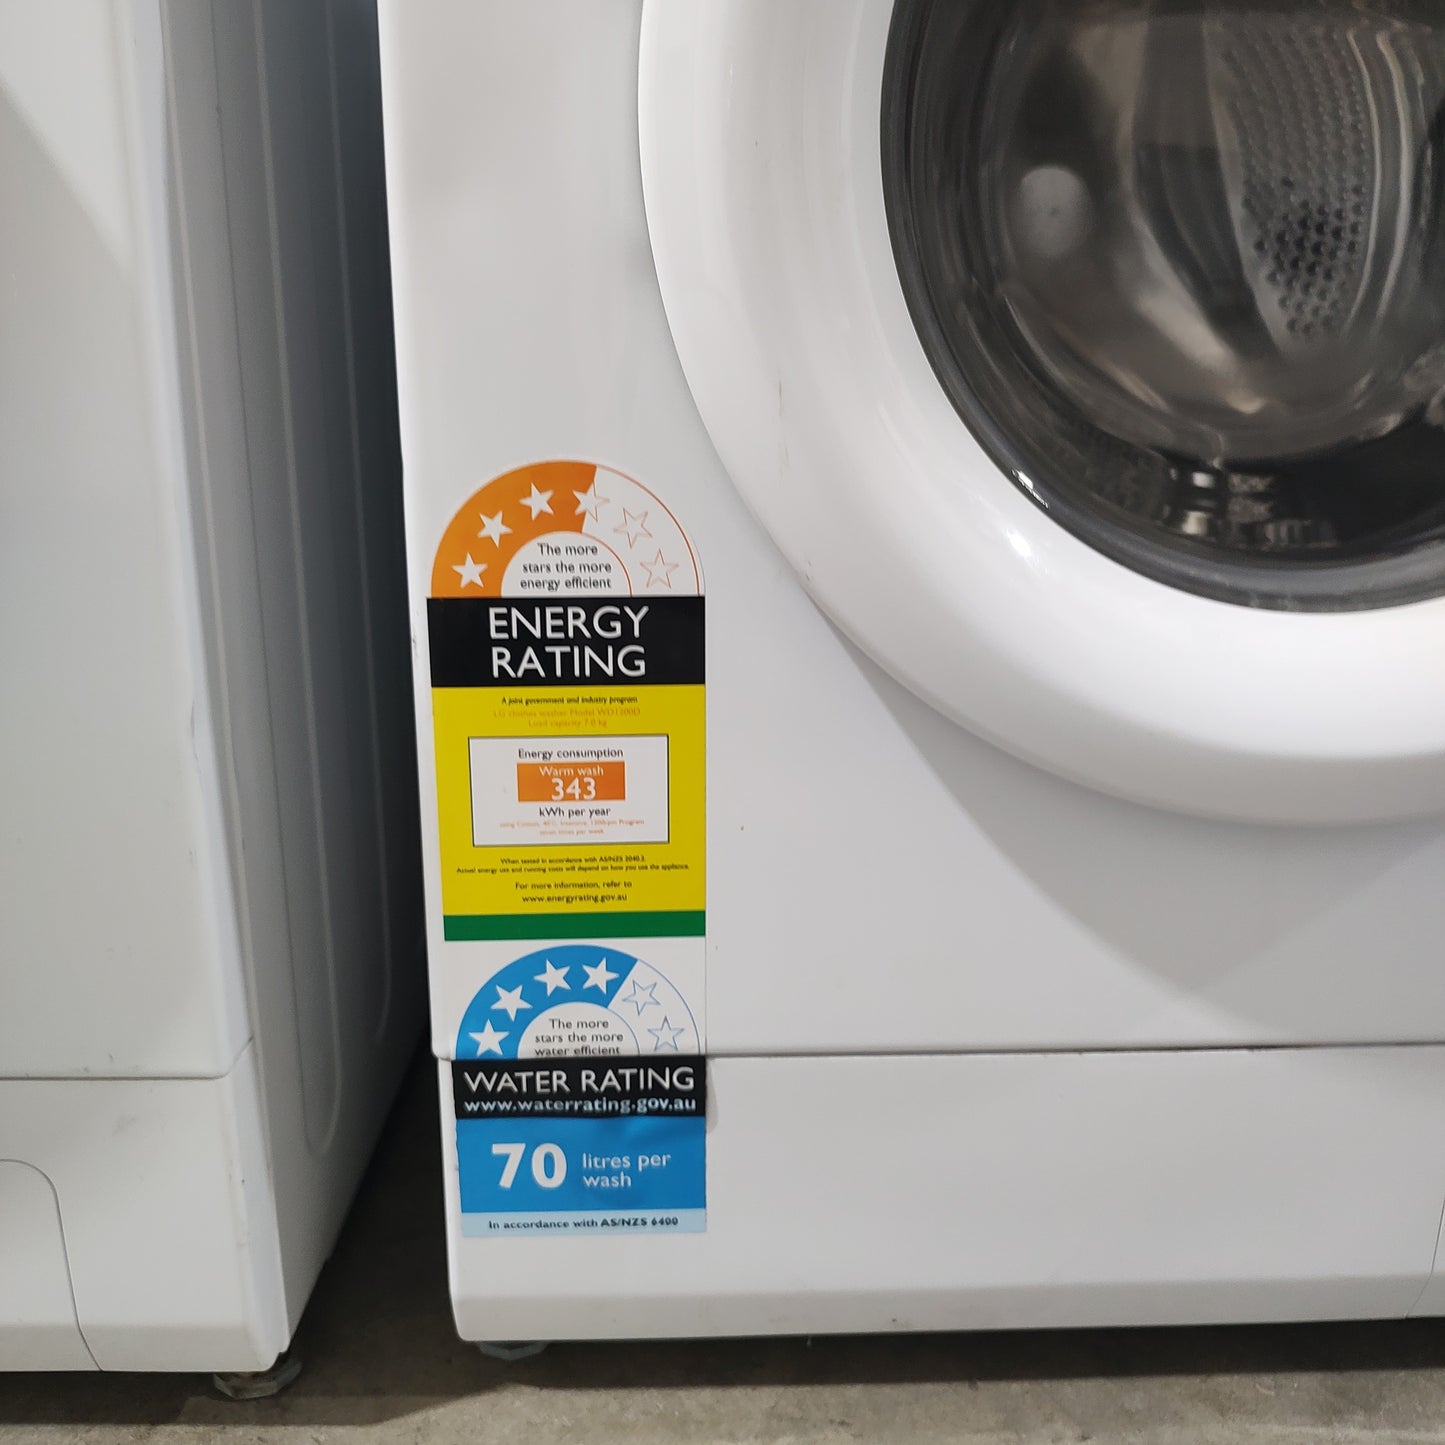 LG WD1200D 7kg Front Load Washing Machine